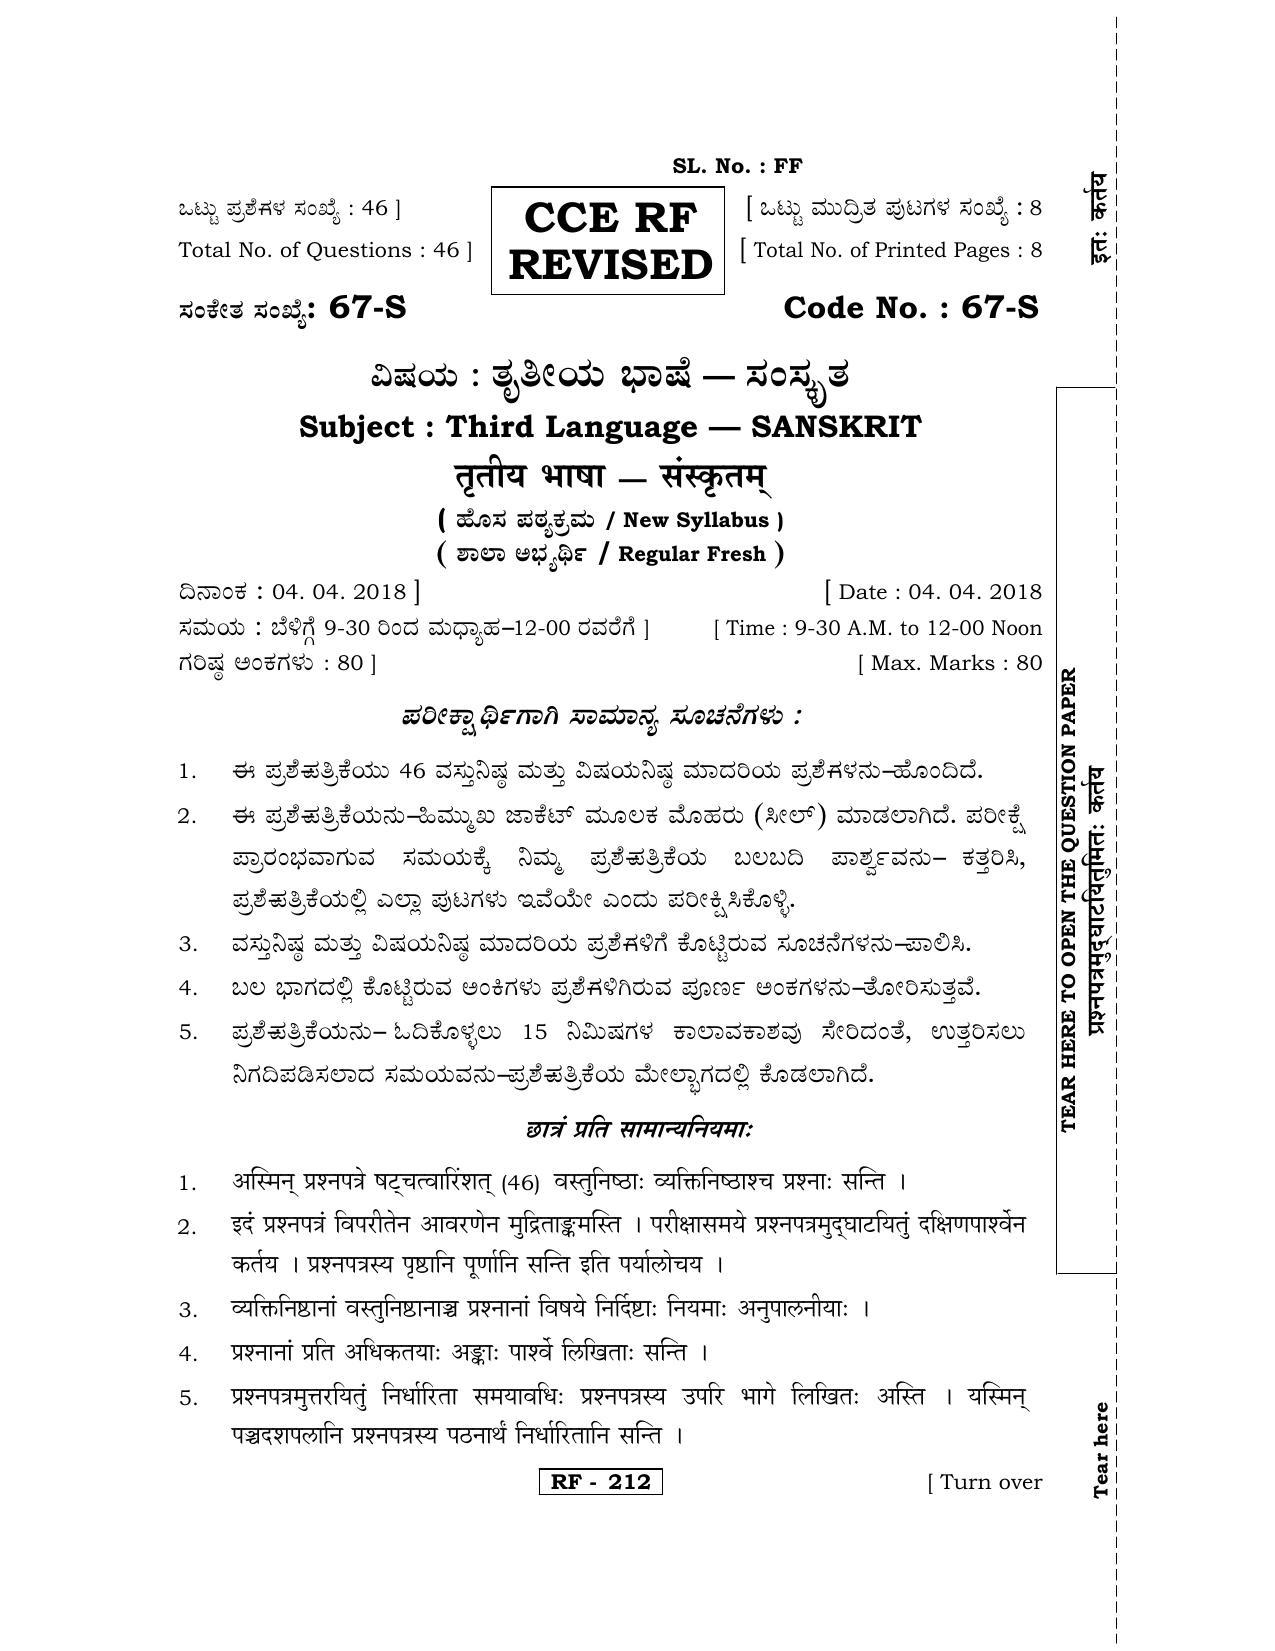 Karnataka SSLC Sanskrit - Third Language - SANSKRIT (67-S-CCE RF REVISED_39) April 2018 Question Paper - Page 1